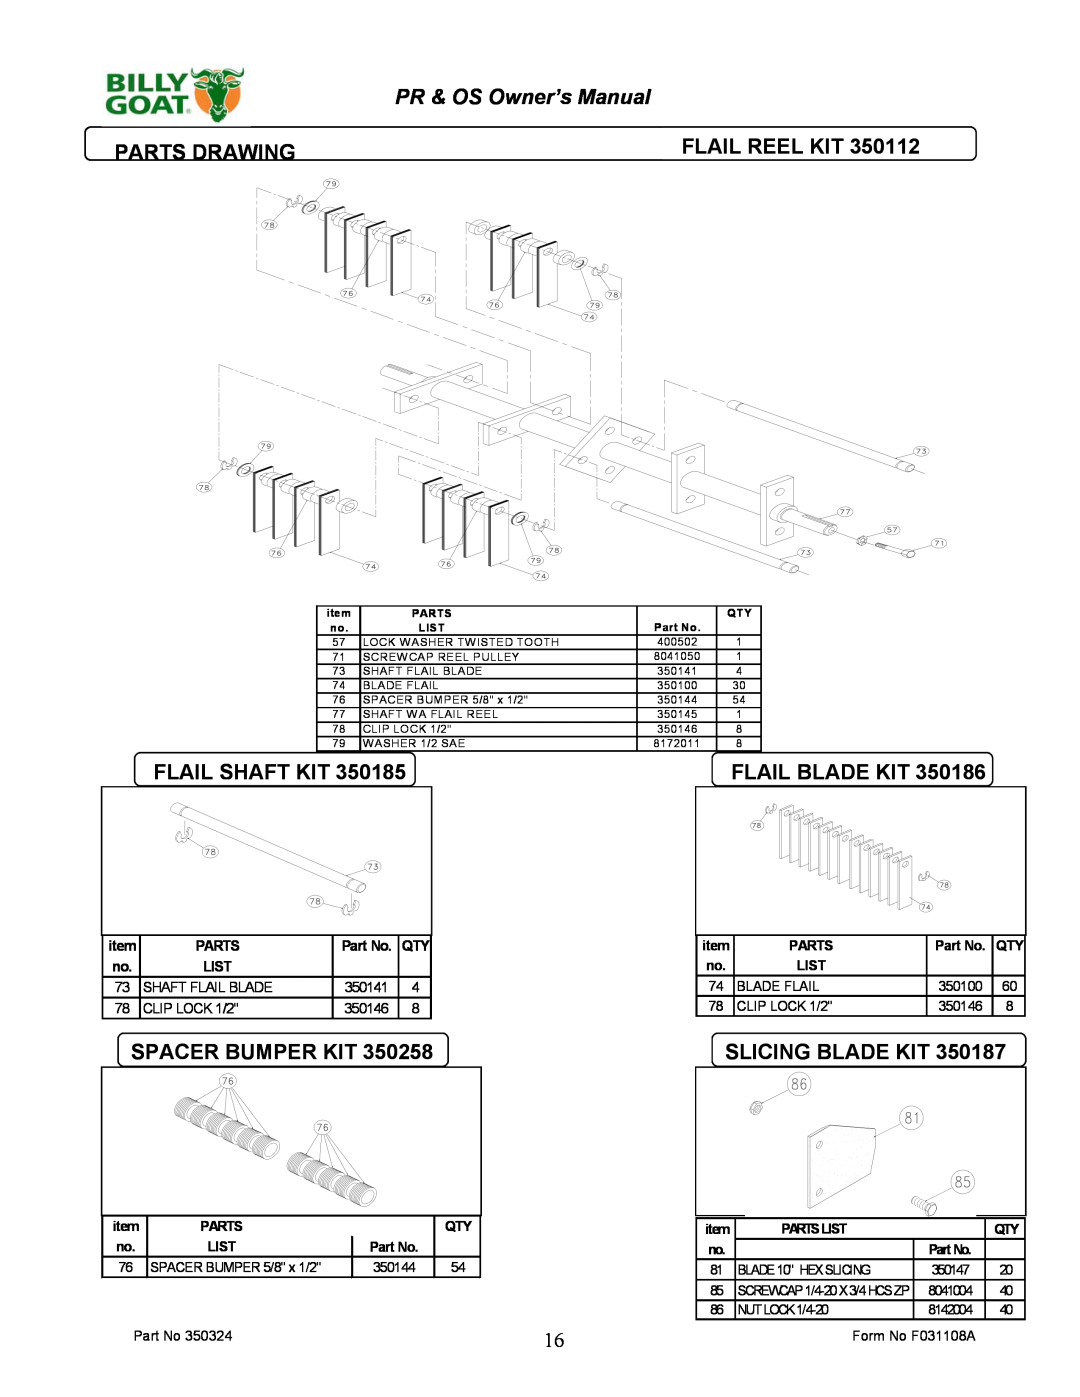 Billy Goat PR600S Parts Drawing, Flail Shaft Kit, Flail Blade Kit, Spacer Bumper Kit, Slicing Blade Kit, Flail Reel Kit 